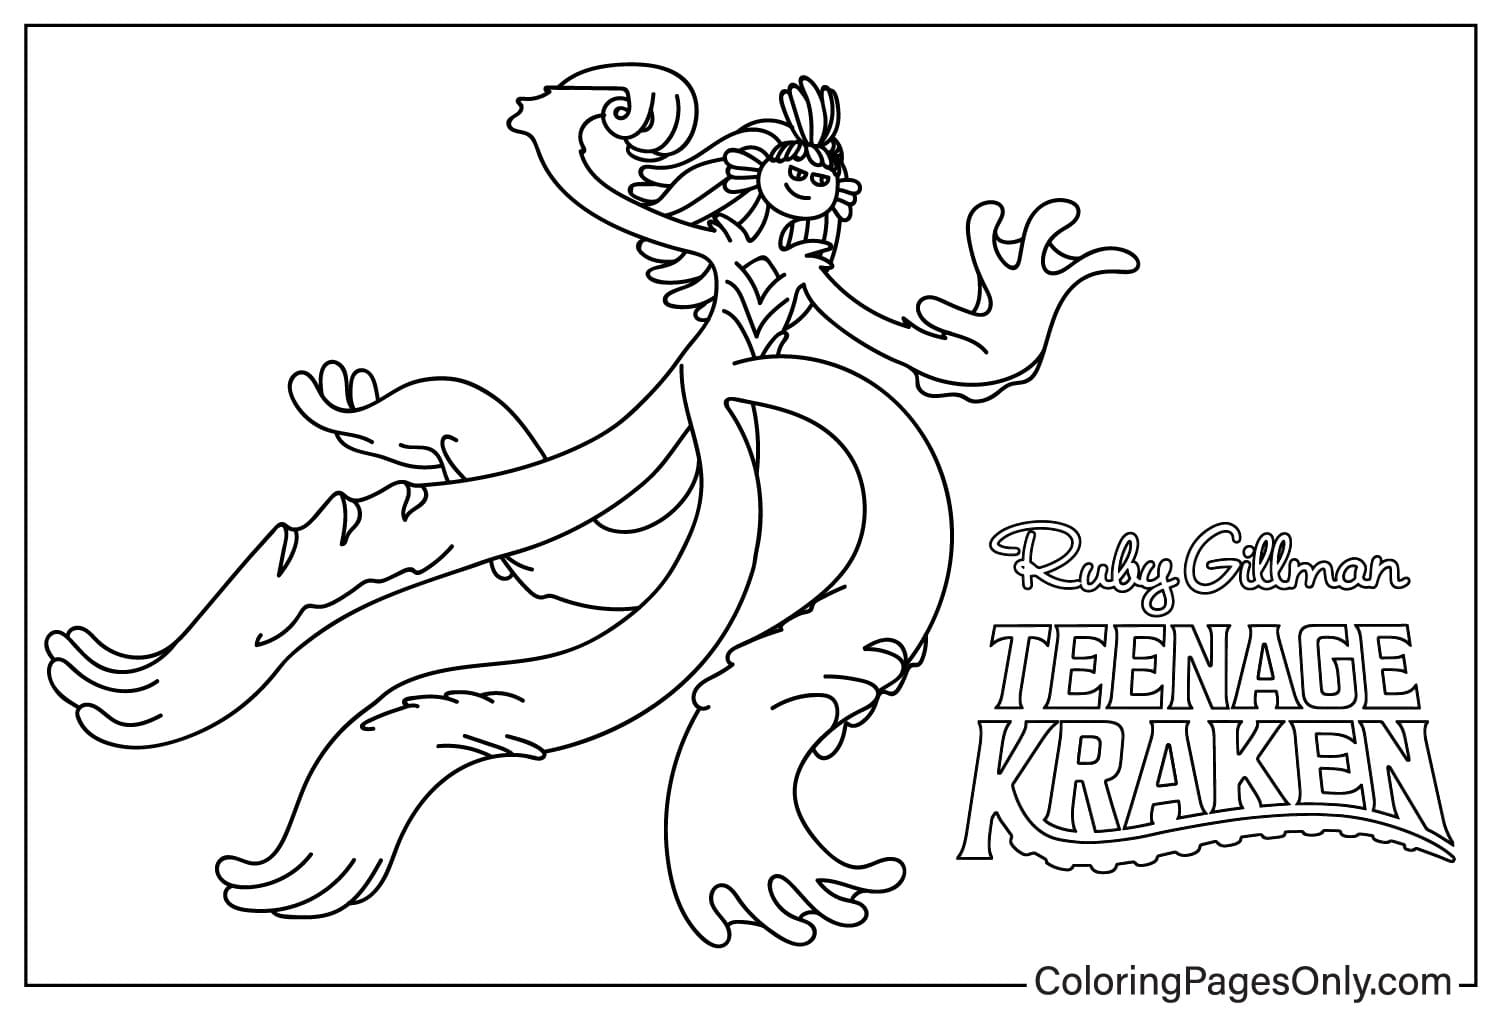 Agatha Gillman Coloring Page from Ruby Gillman Teenage Kraken